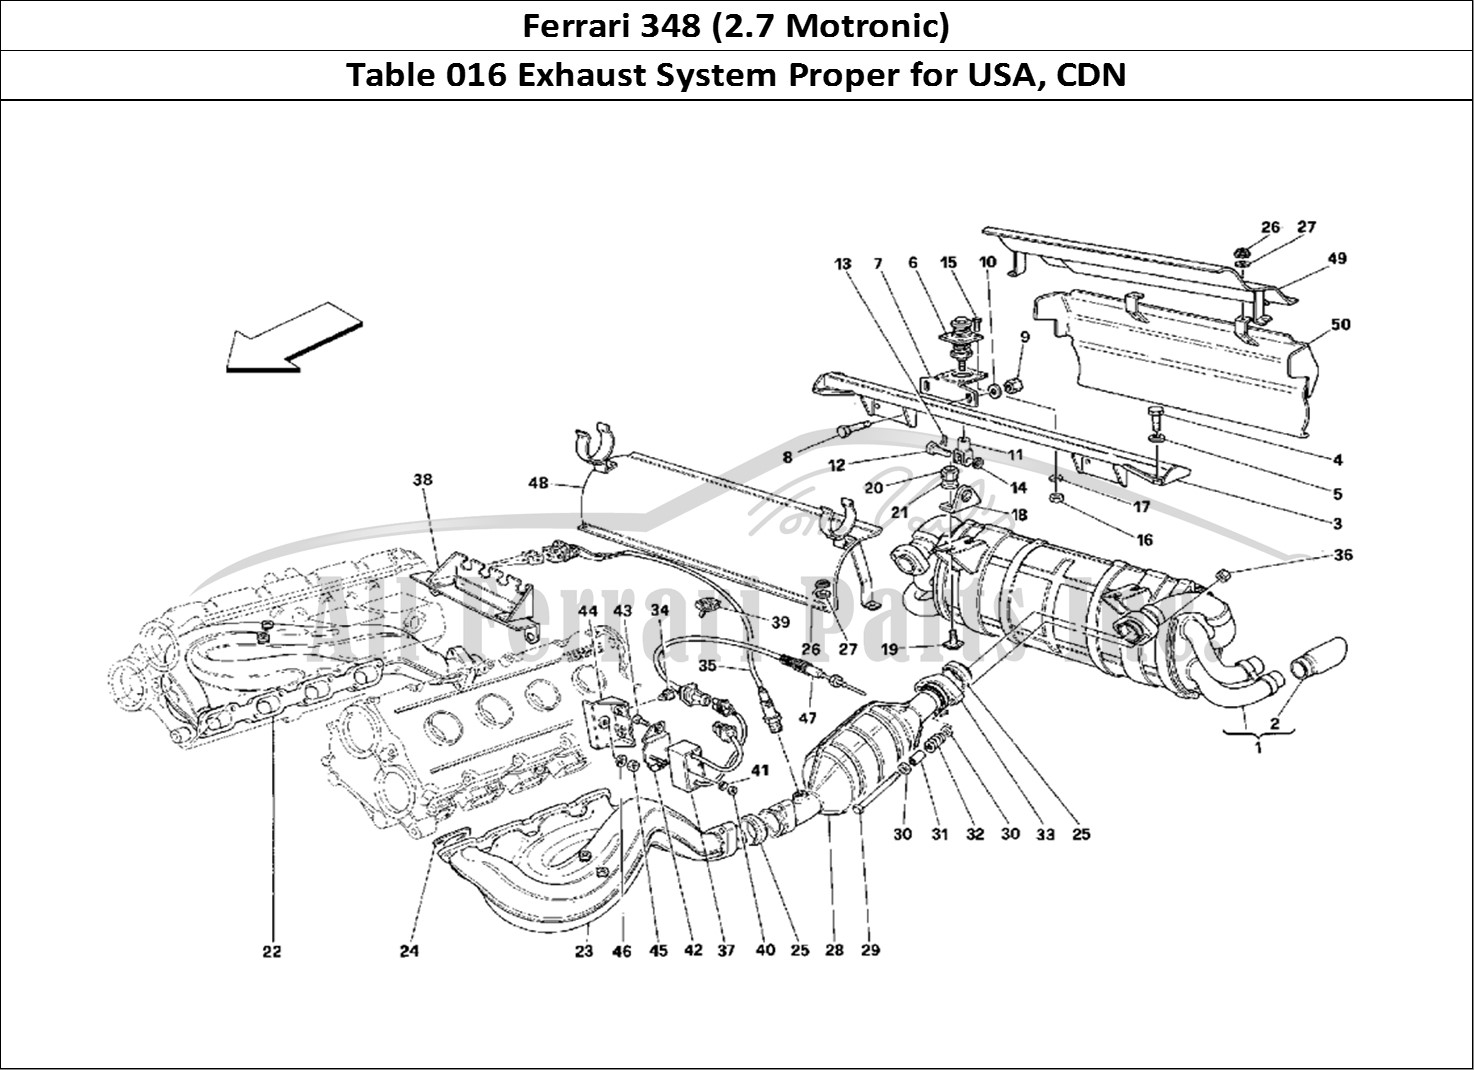 Ferrari Parts Ferrari 348 (2.7 Motronic) Page 016 Exhaust System -Valid for